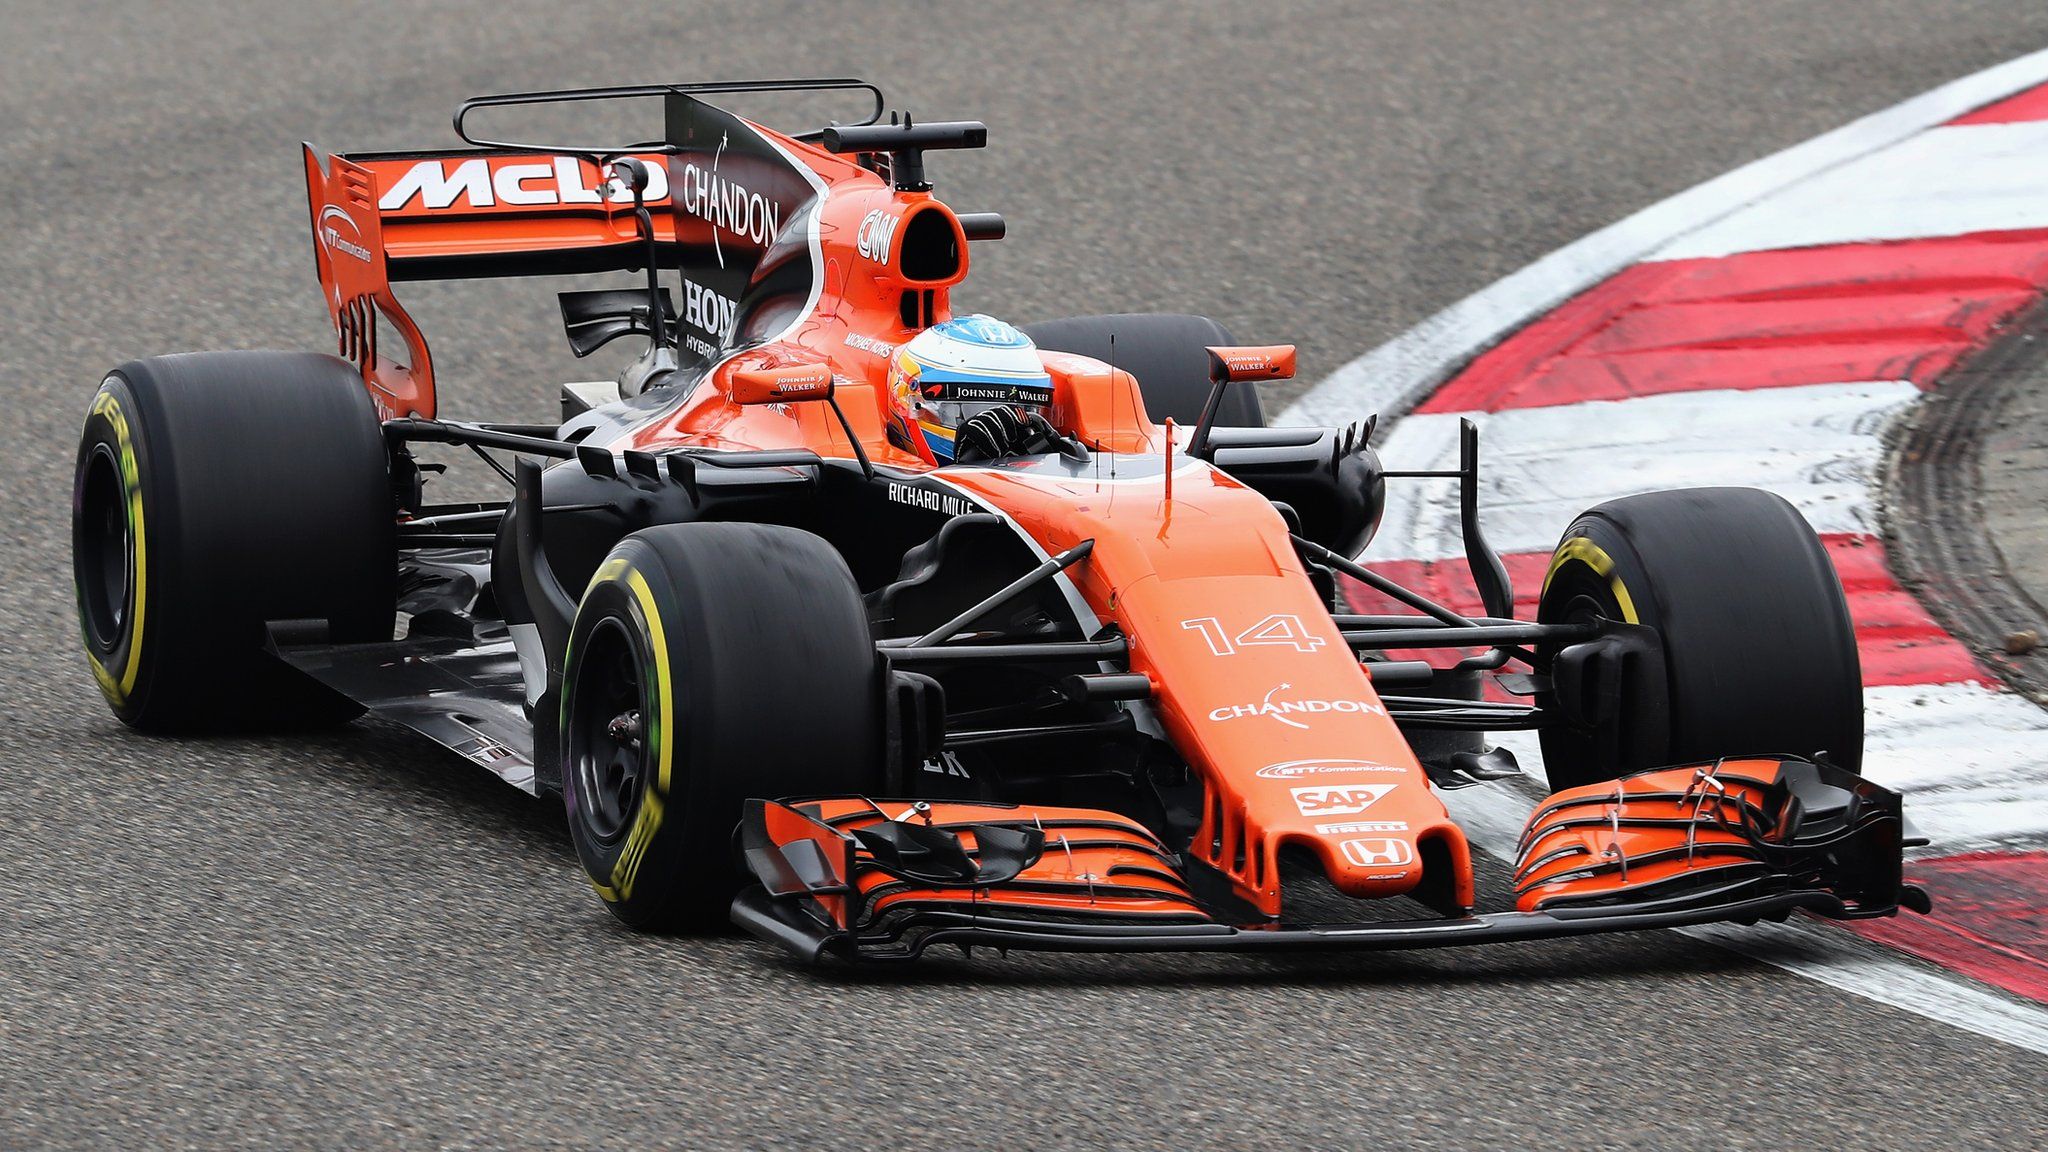 McLaren Honda F1 driver Fernando Alonso